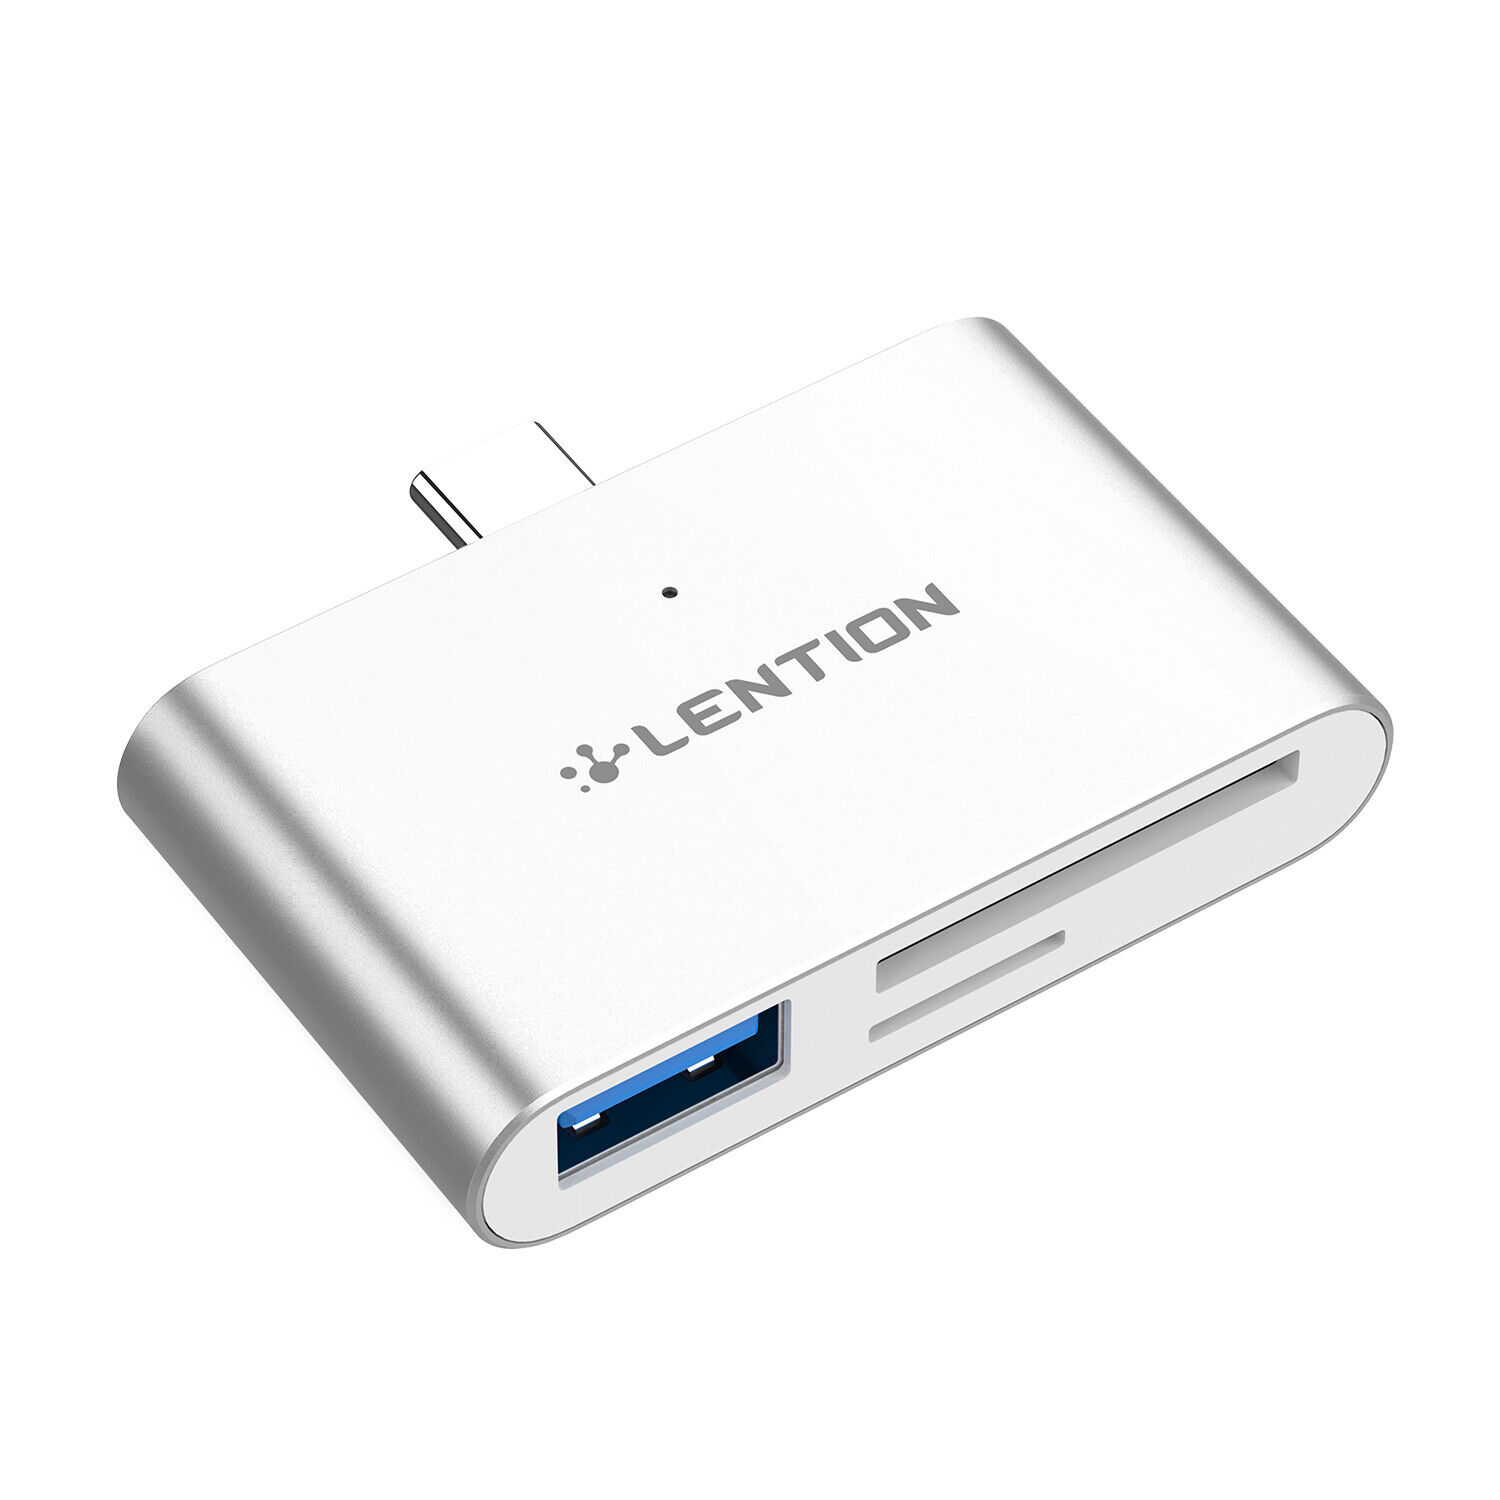 USB-C HUB to USB 3.0 Adapter SD Card Reader for 2021 iPad Pro Mac Air Macbook